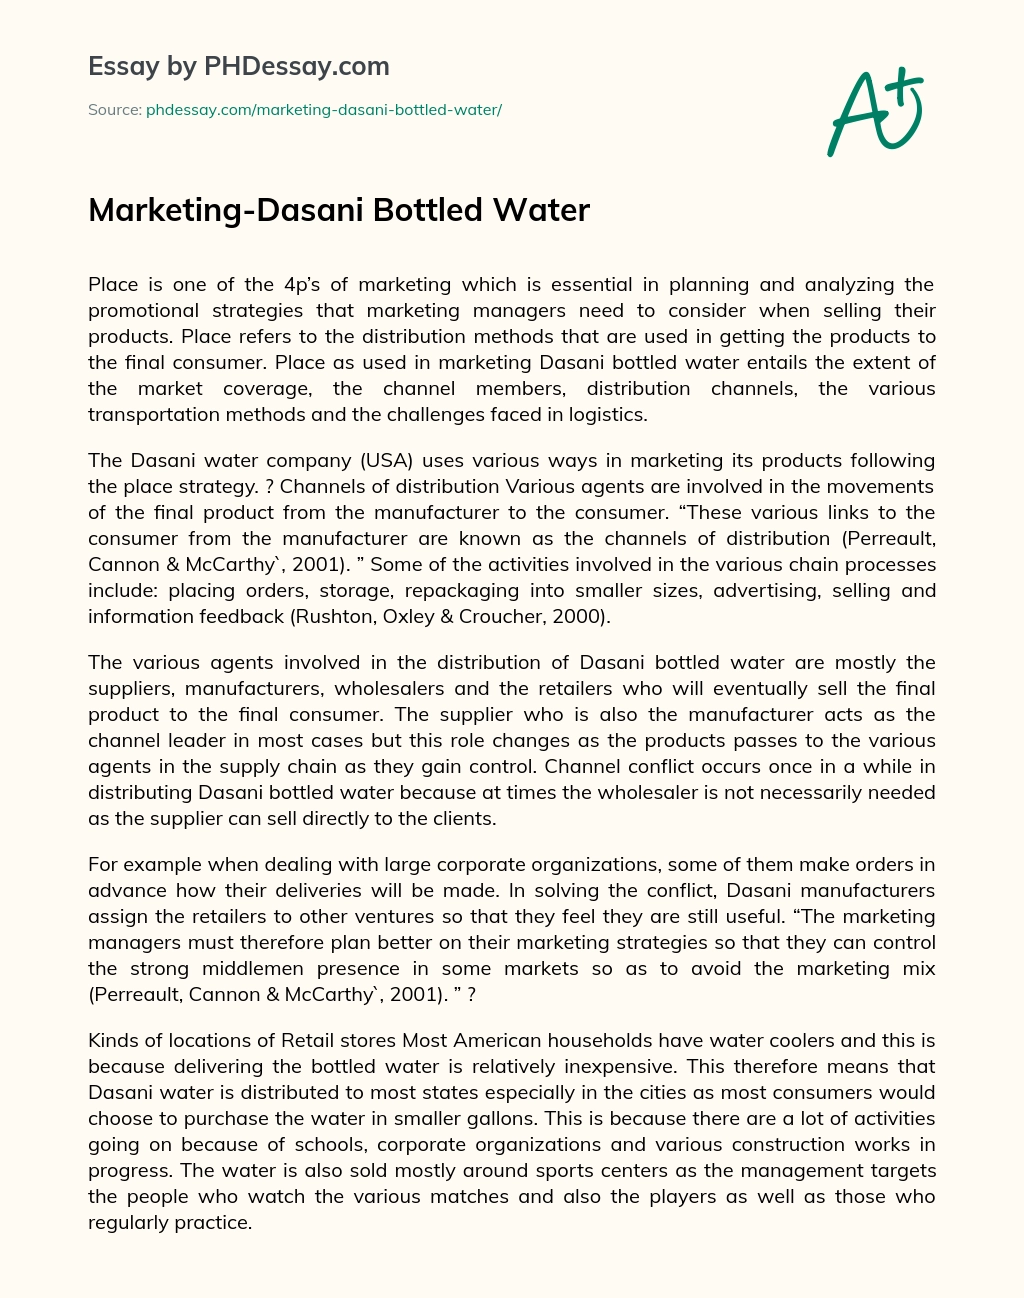 Marketing-Dasani Bottled Water essay